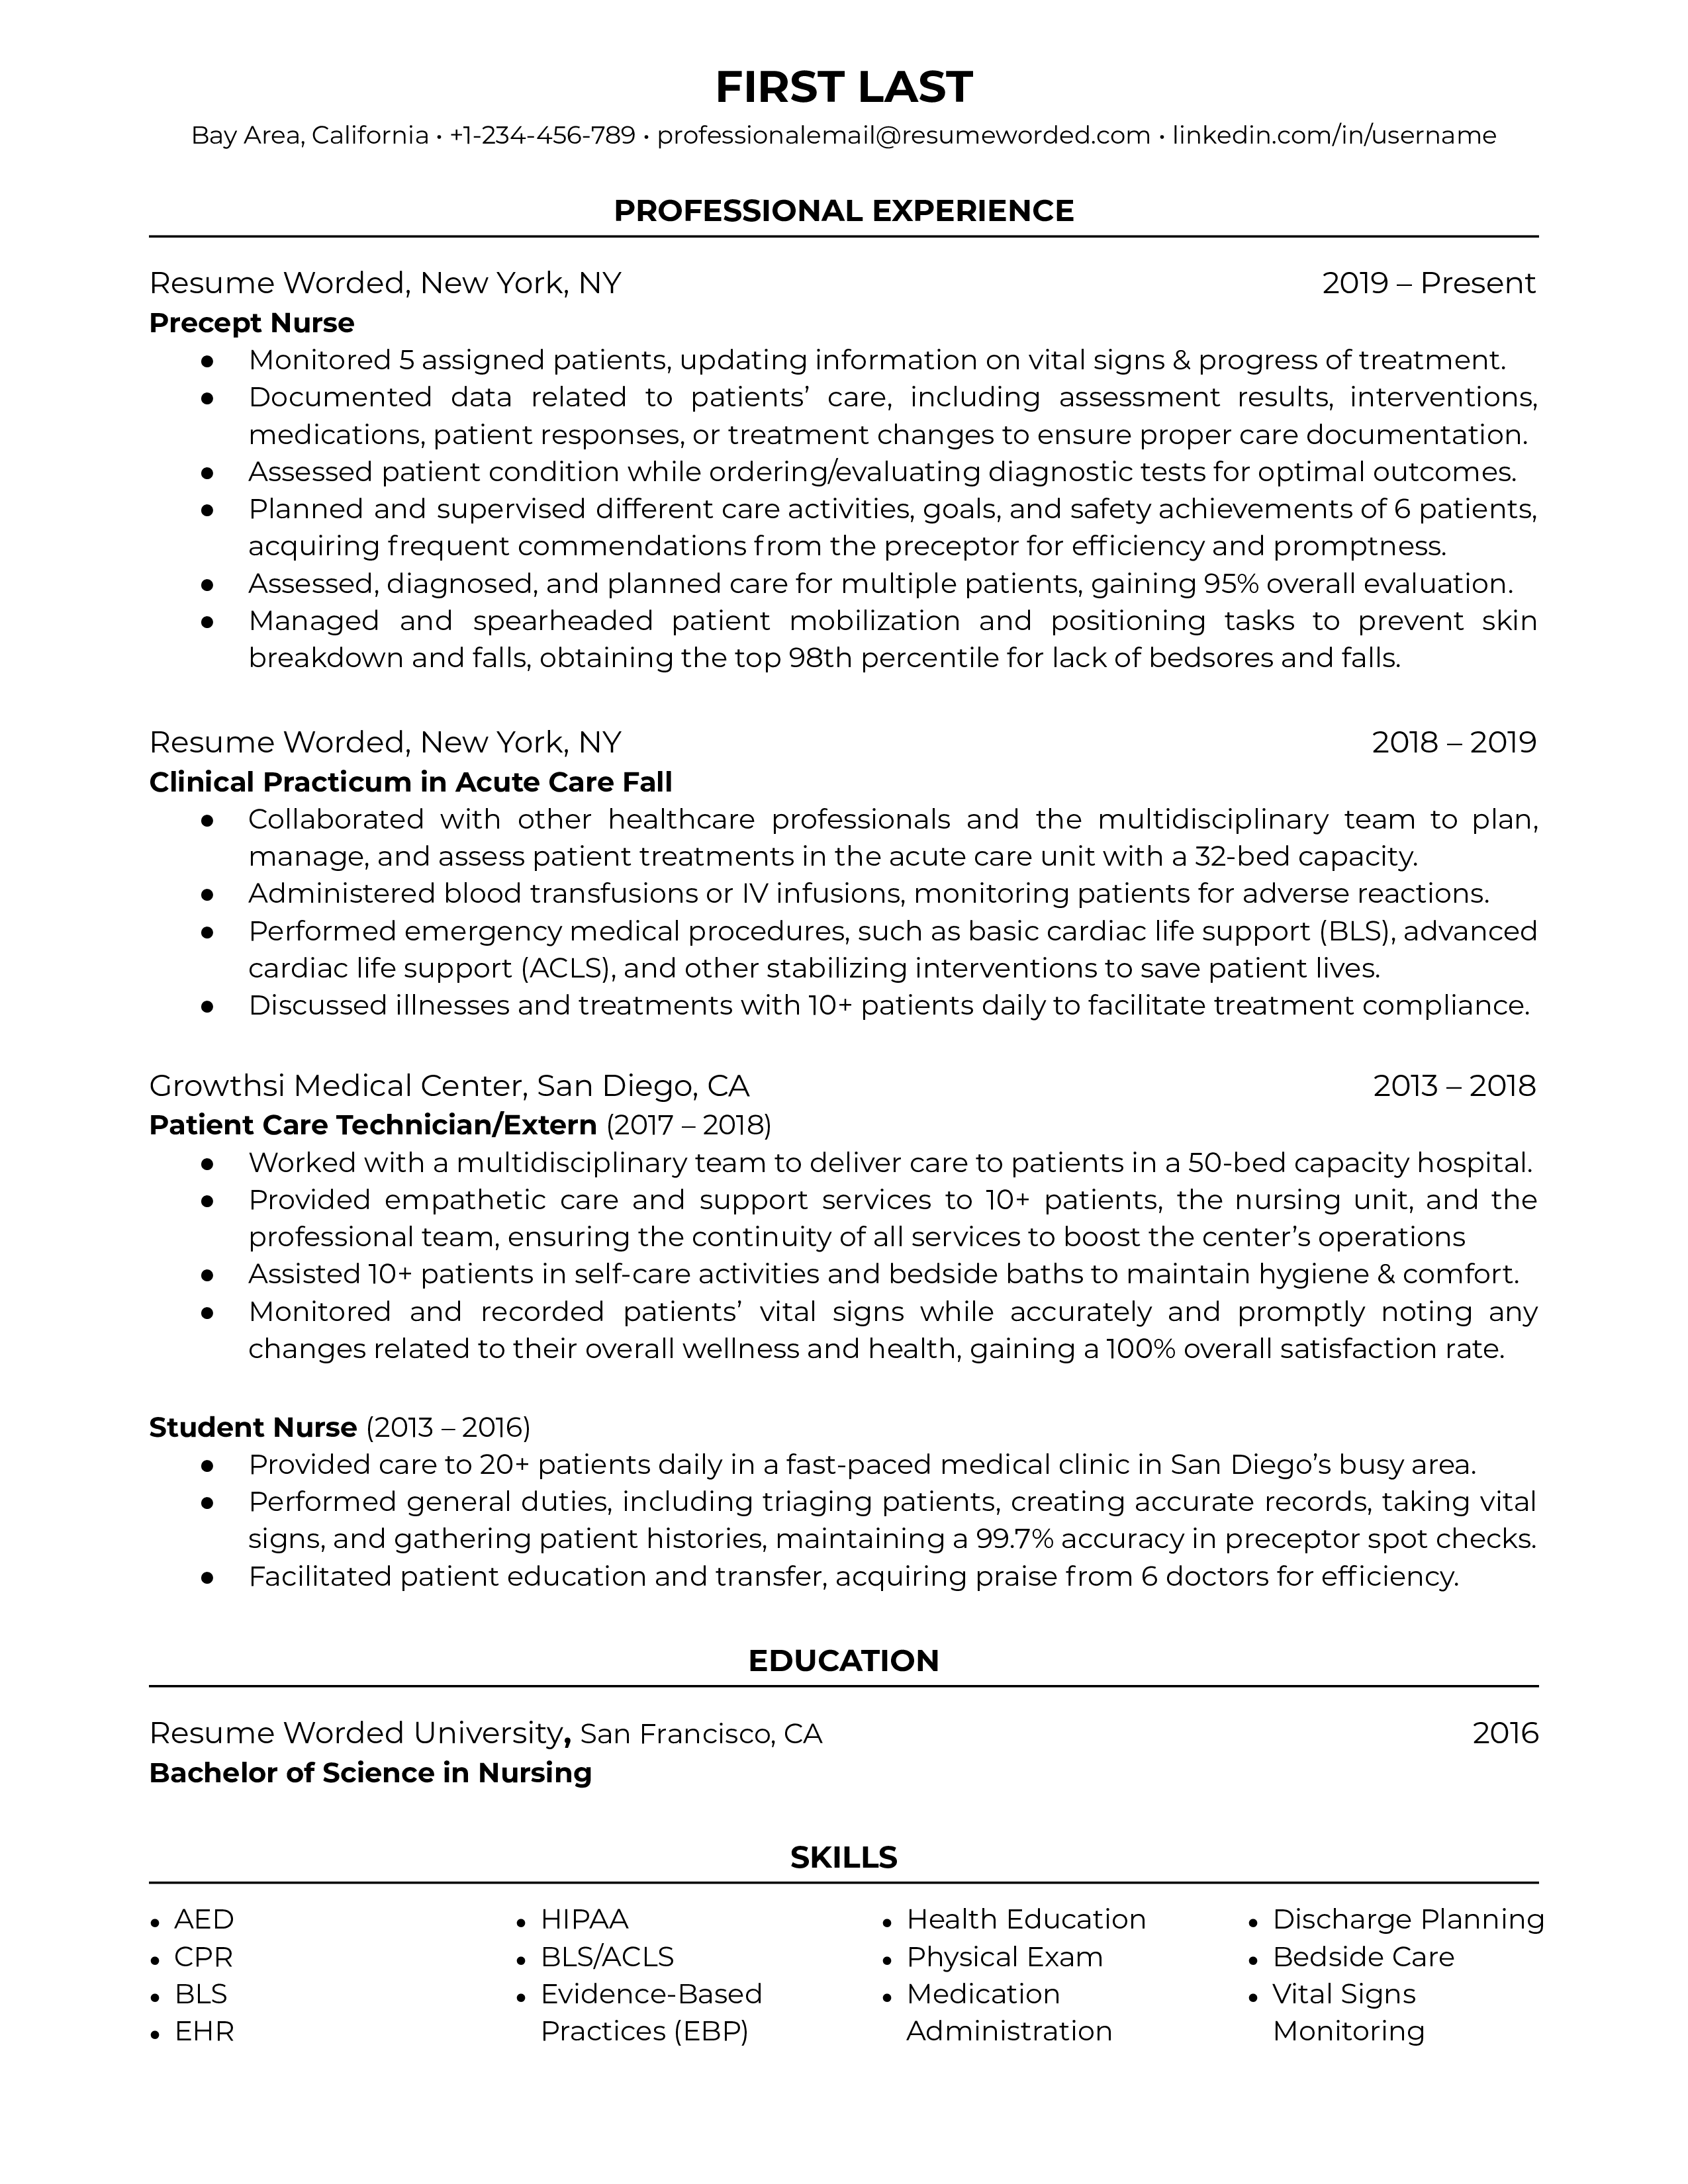 A screenshot of a CV tailored for a new grad nurse role.